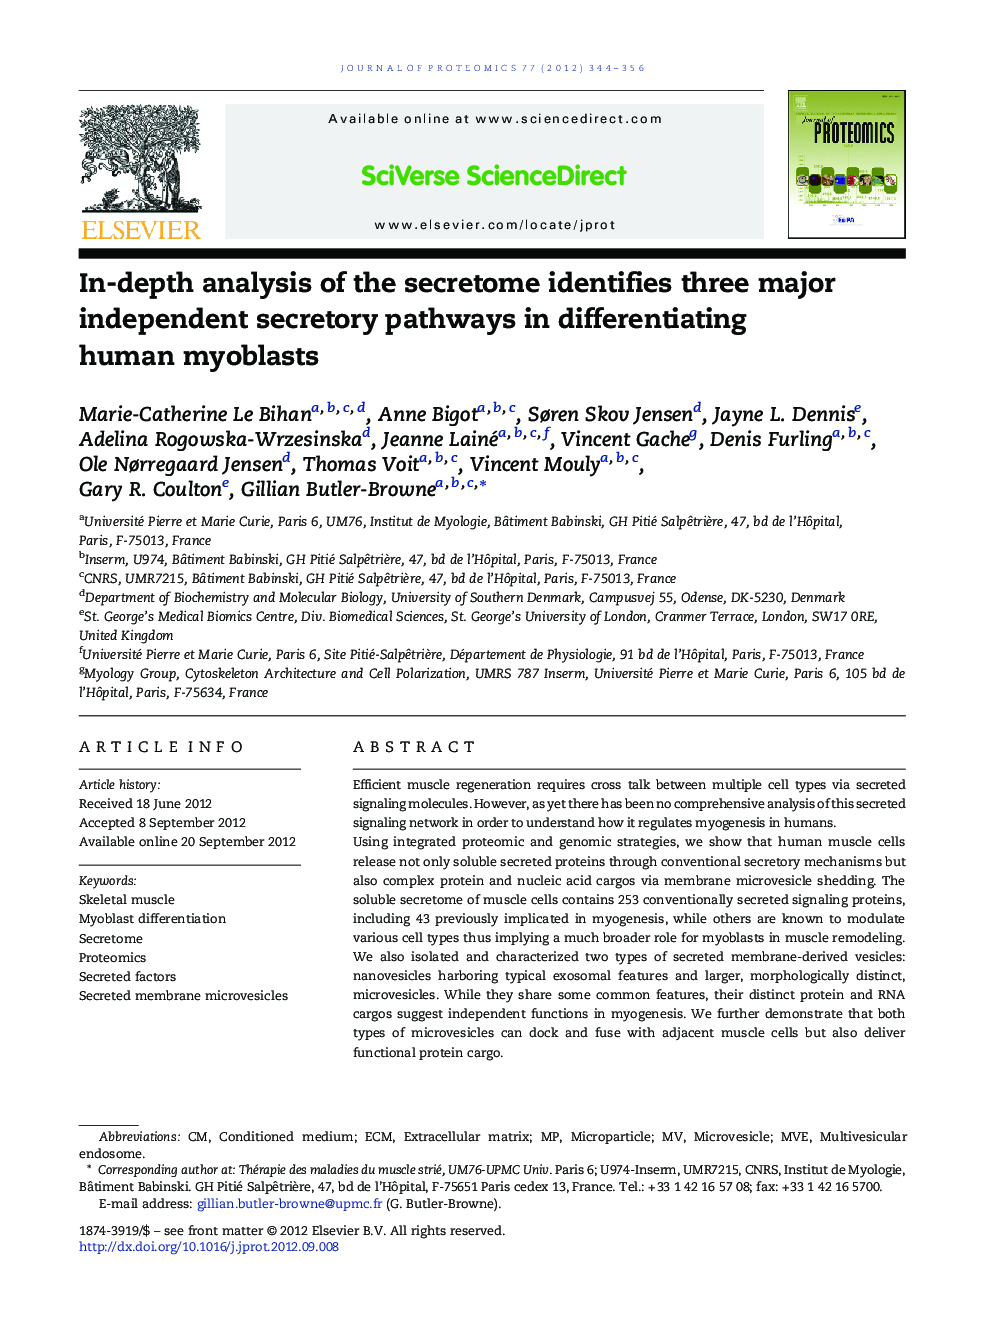 In-depth analysis of the secretome identifies three major independent secretory pathways in differentiating human myoblasts